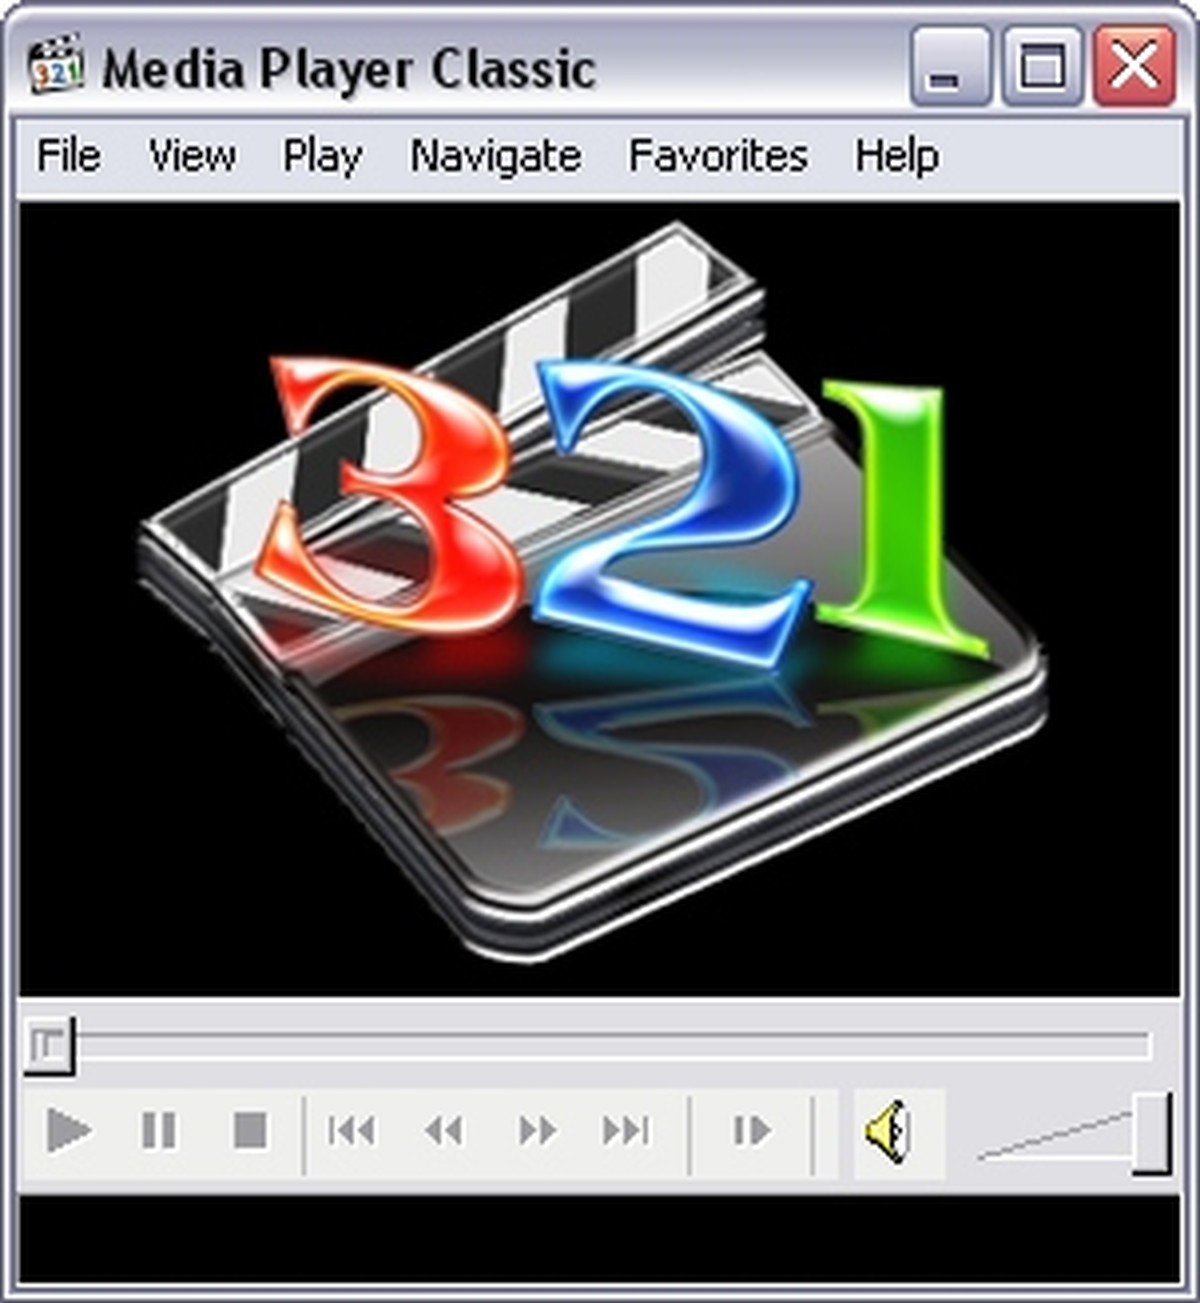 321 media player classic download baixaki windows 7 adobe reader 10.1 free download